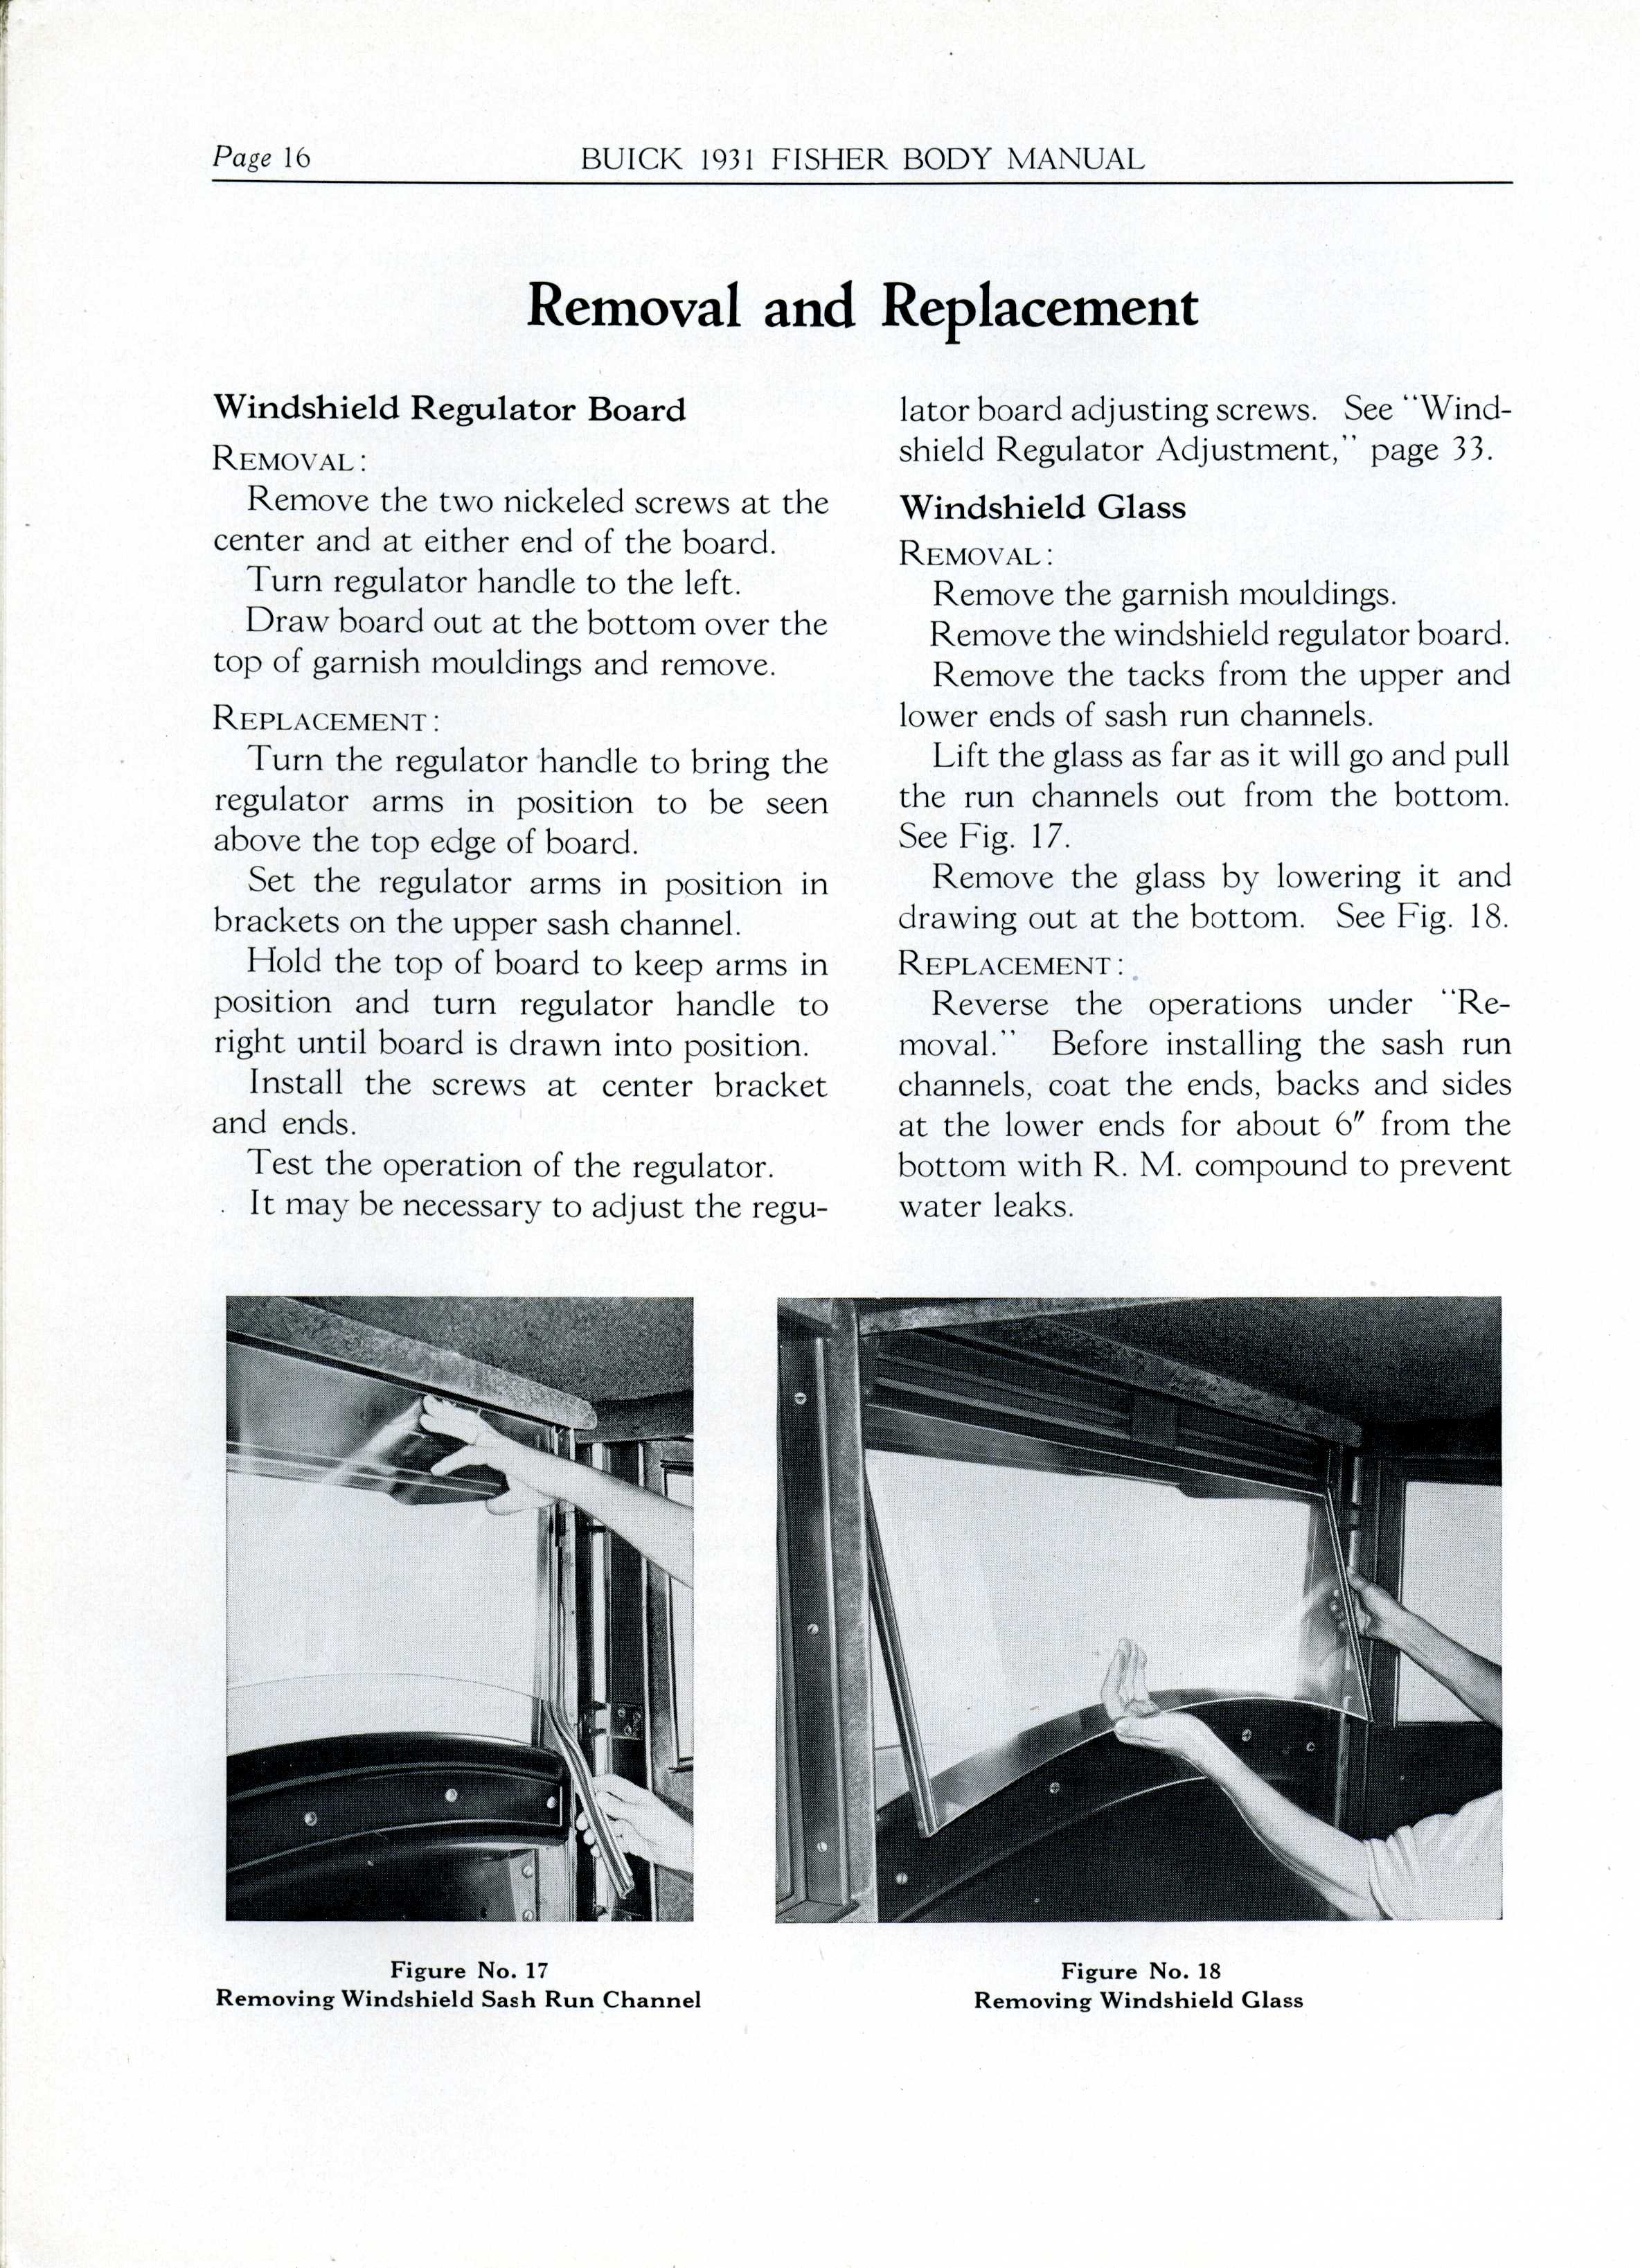 1931 Buick Fisher Body Manual-16